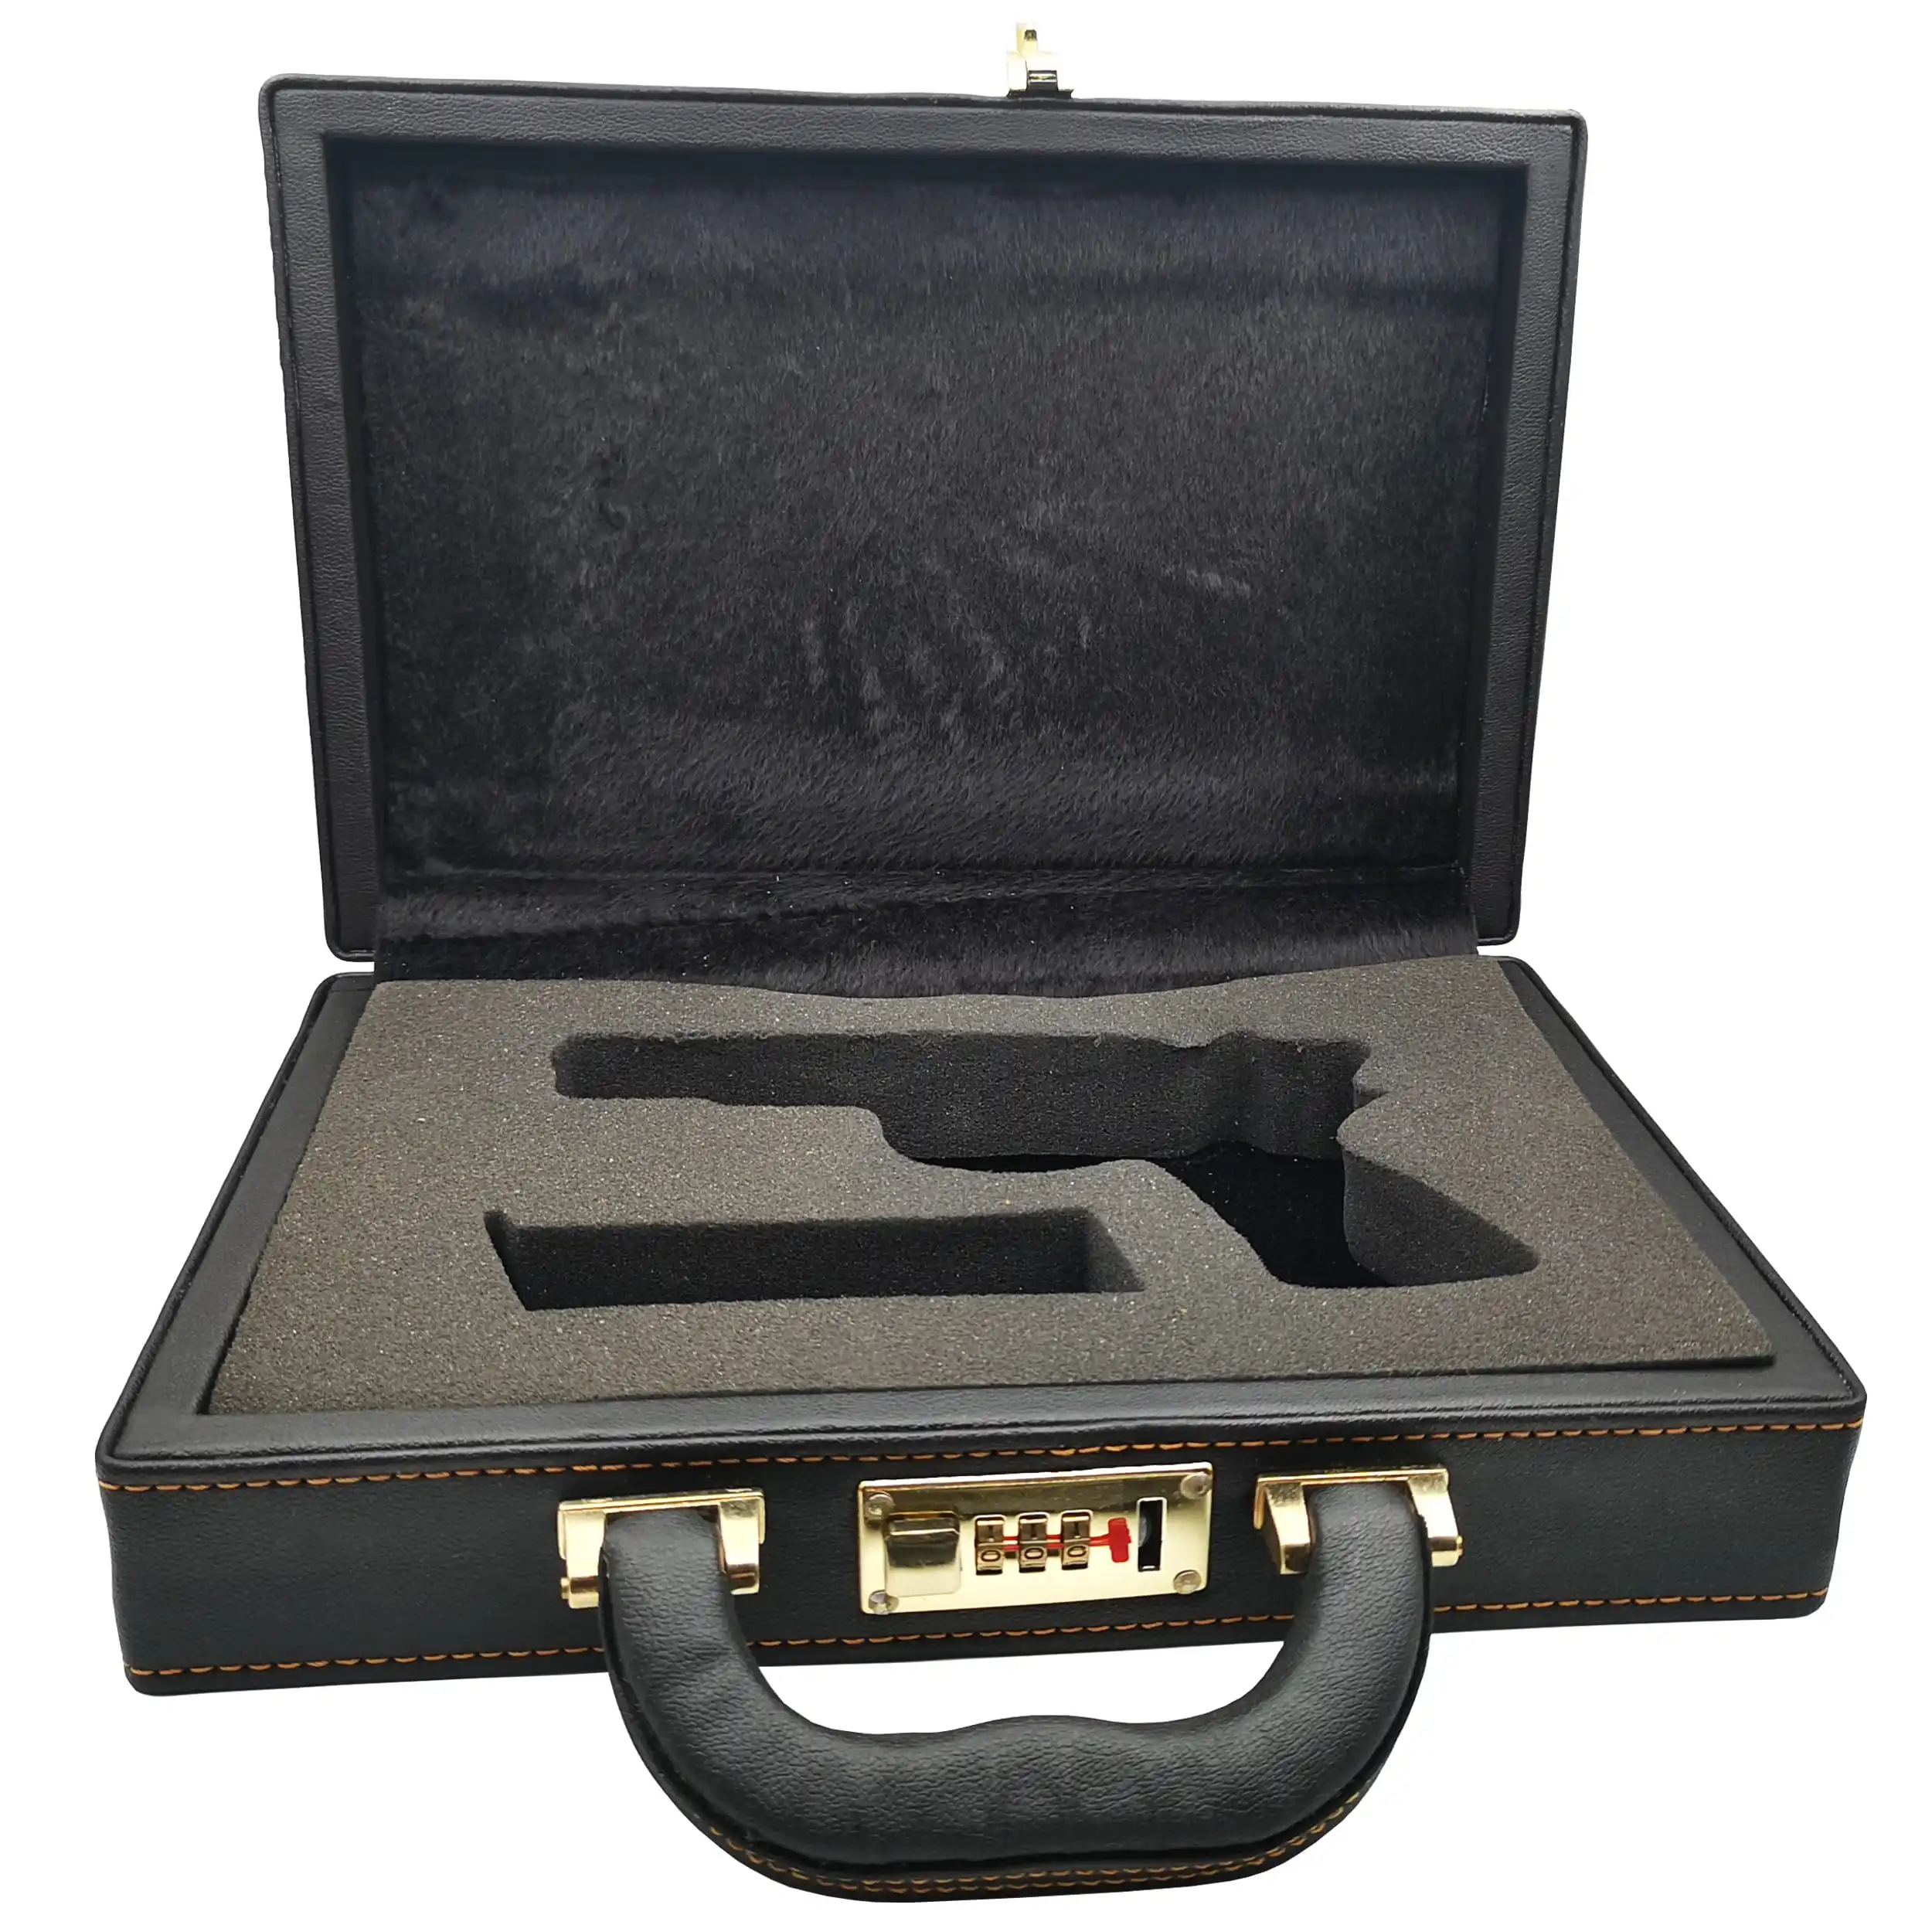 Luger P08 Parabellum Leather Gun Case Bond Style Personalized Password Lock System Handgun Carry And Storage Box